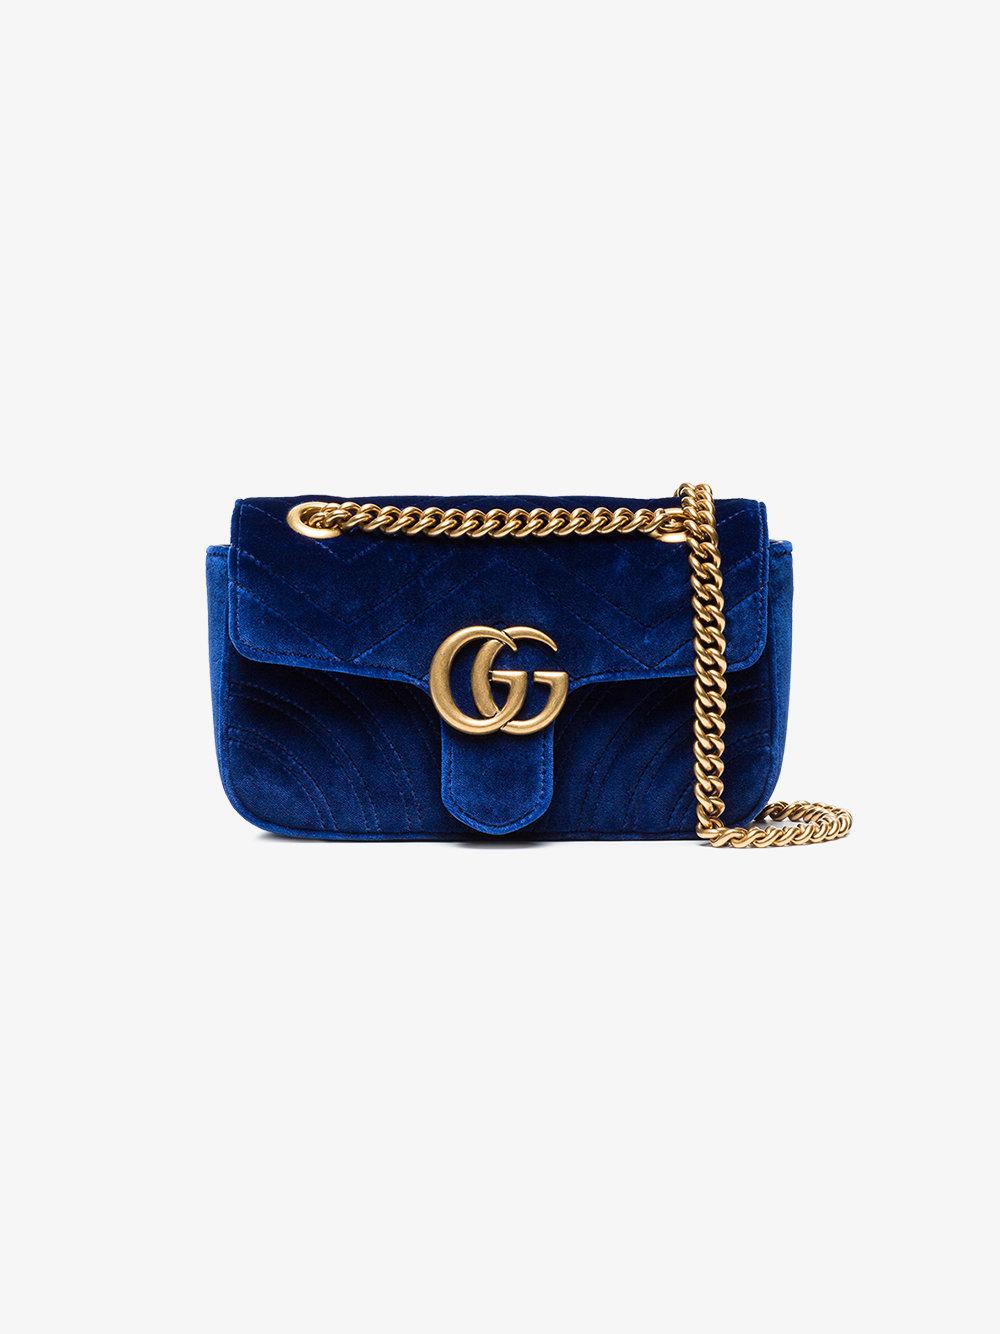 Gucci Mini Gg Marmont Velvet Shoulder Bag in Blue - Lyst